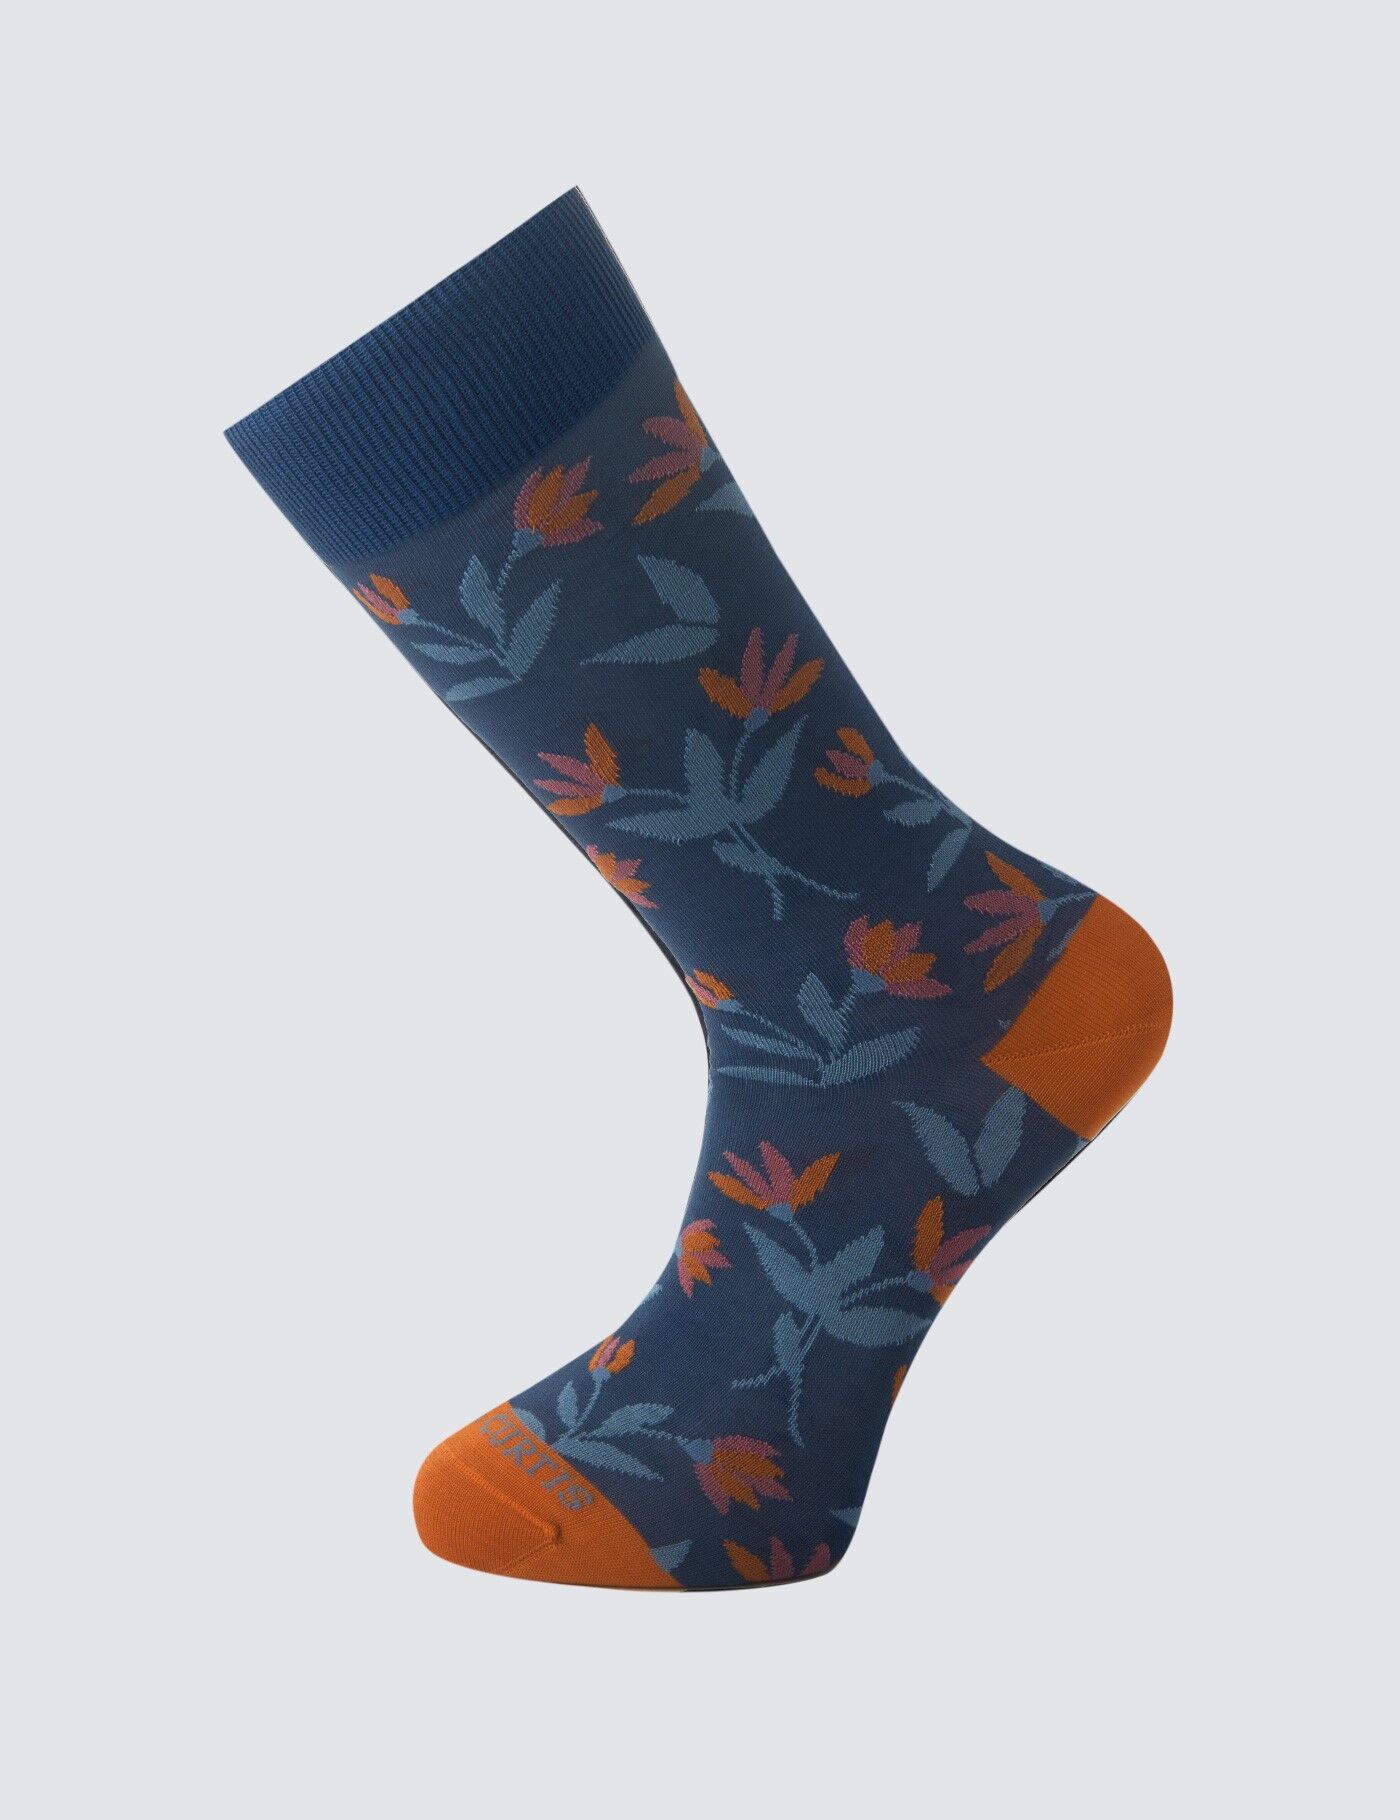 Hawes & Curtis Men's Floral Cotton Rich Socks in Blue/Orange   Medium   Hawes & Curtis